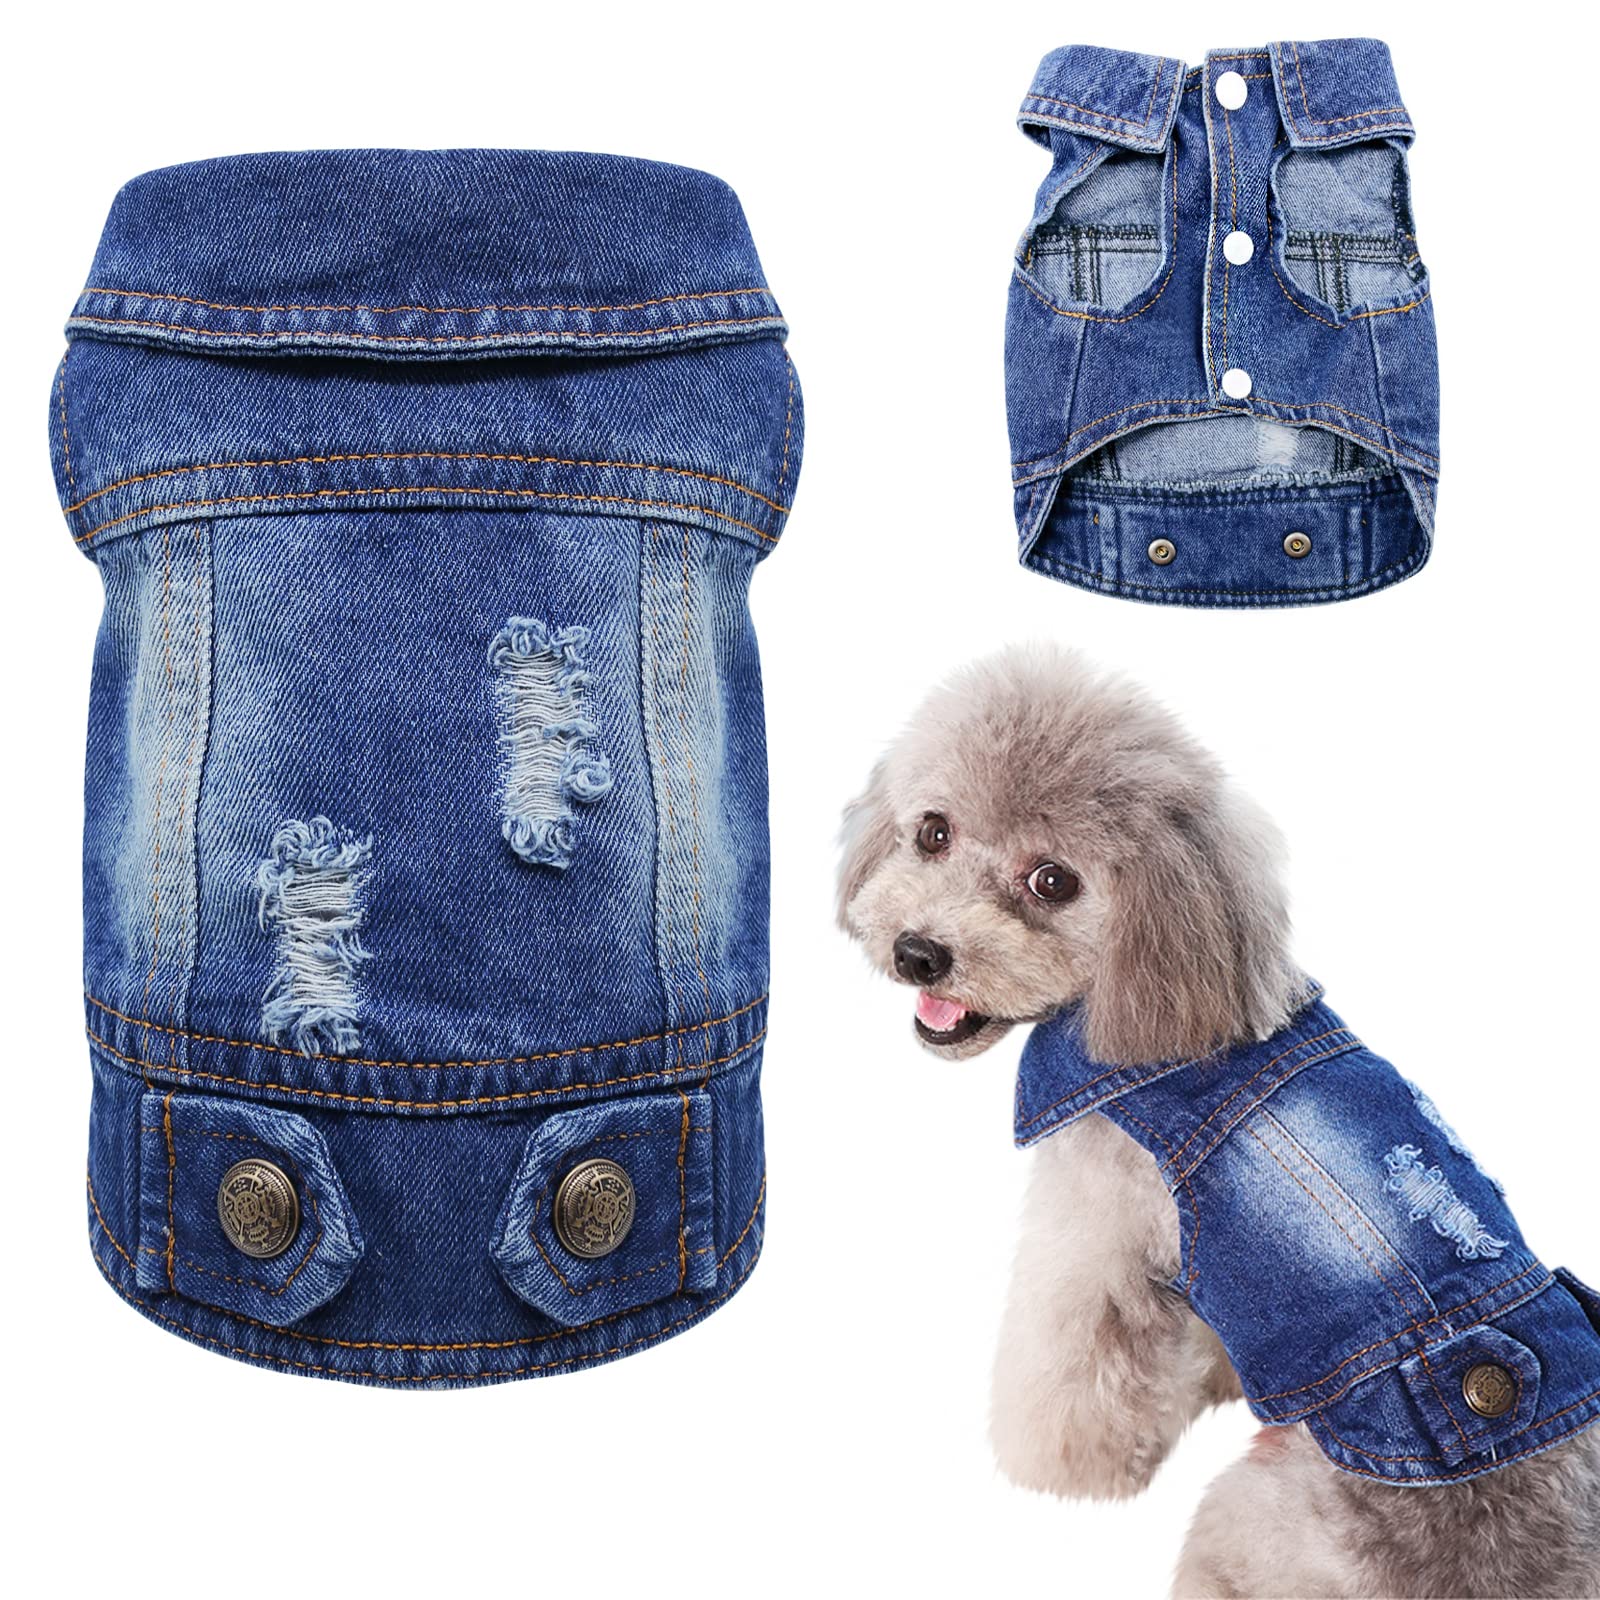 Sild Pet Clothes Dog Jeans Jacket Cool Blue Denim Coat Small Medium Dogs Lapel Vests Classic Hoodies Puppy Blue Vintage Washed C